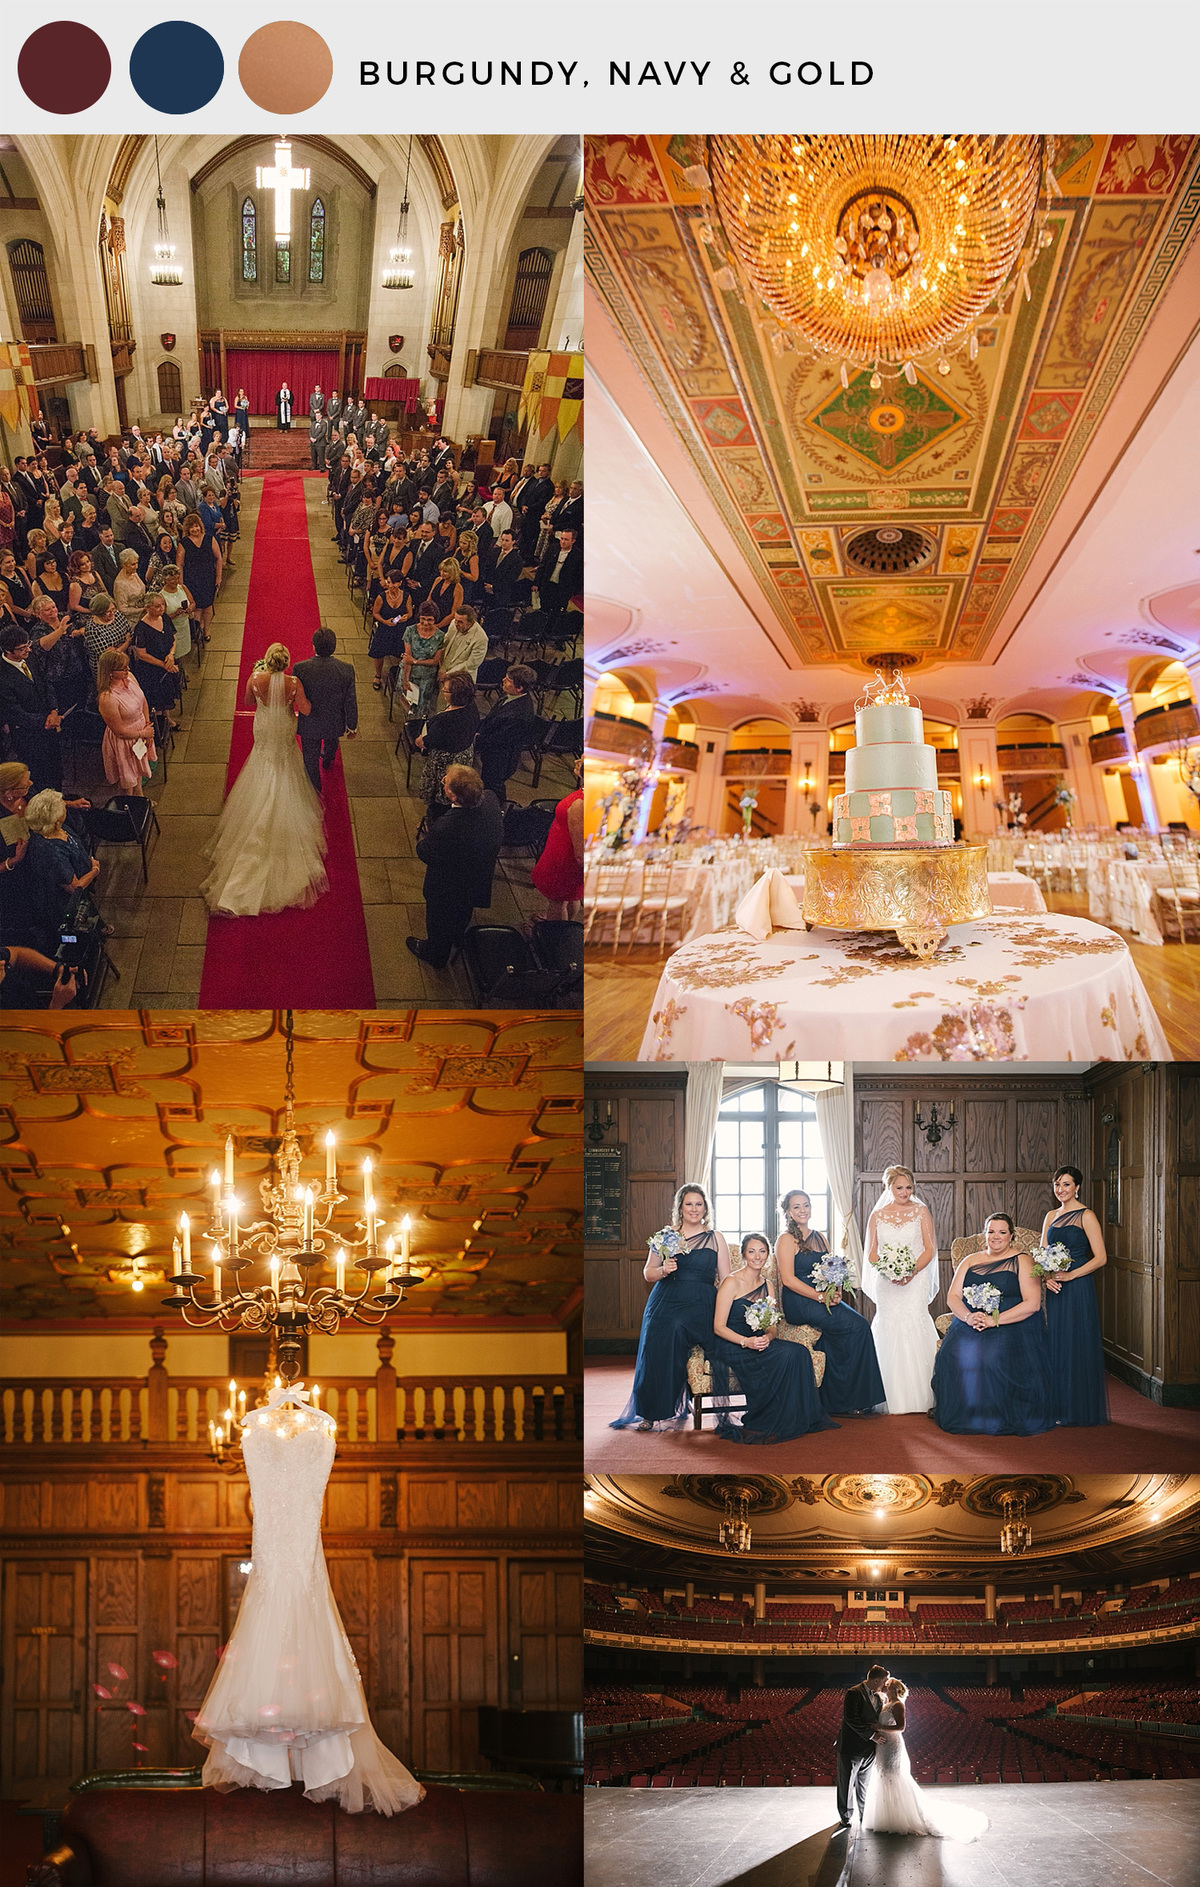 Detroit Masonic Temple wedding photos showing Michigan winter wedding venues